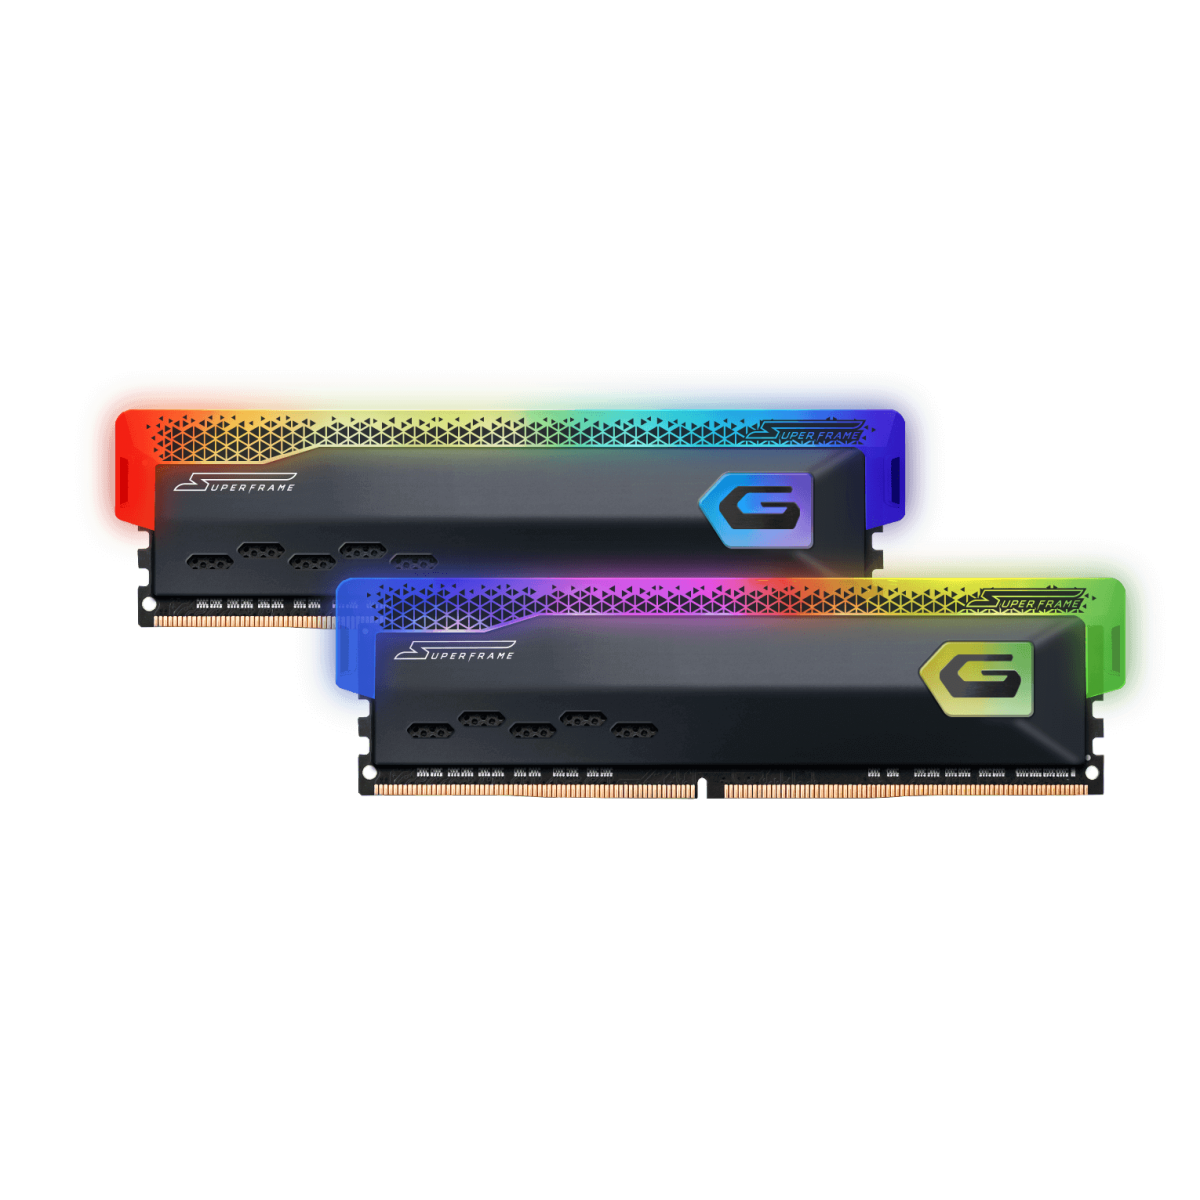 Kit Upgrade, AMD Ryzen 5 3600, Placa Mãe SuperFrame A520M Gaming, Memória DDR4 SuperFrame RGB 16GB (2X8GB)